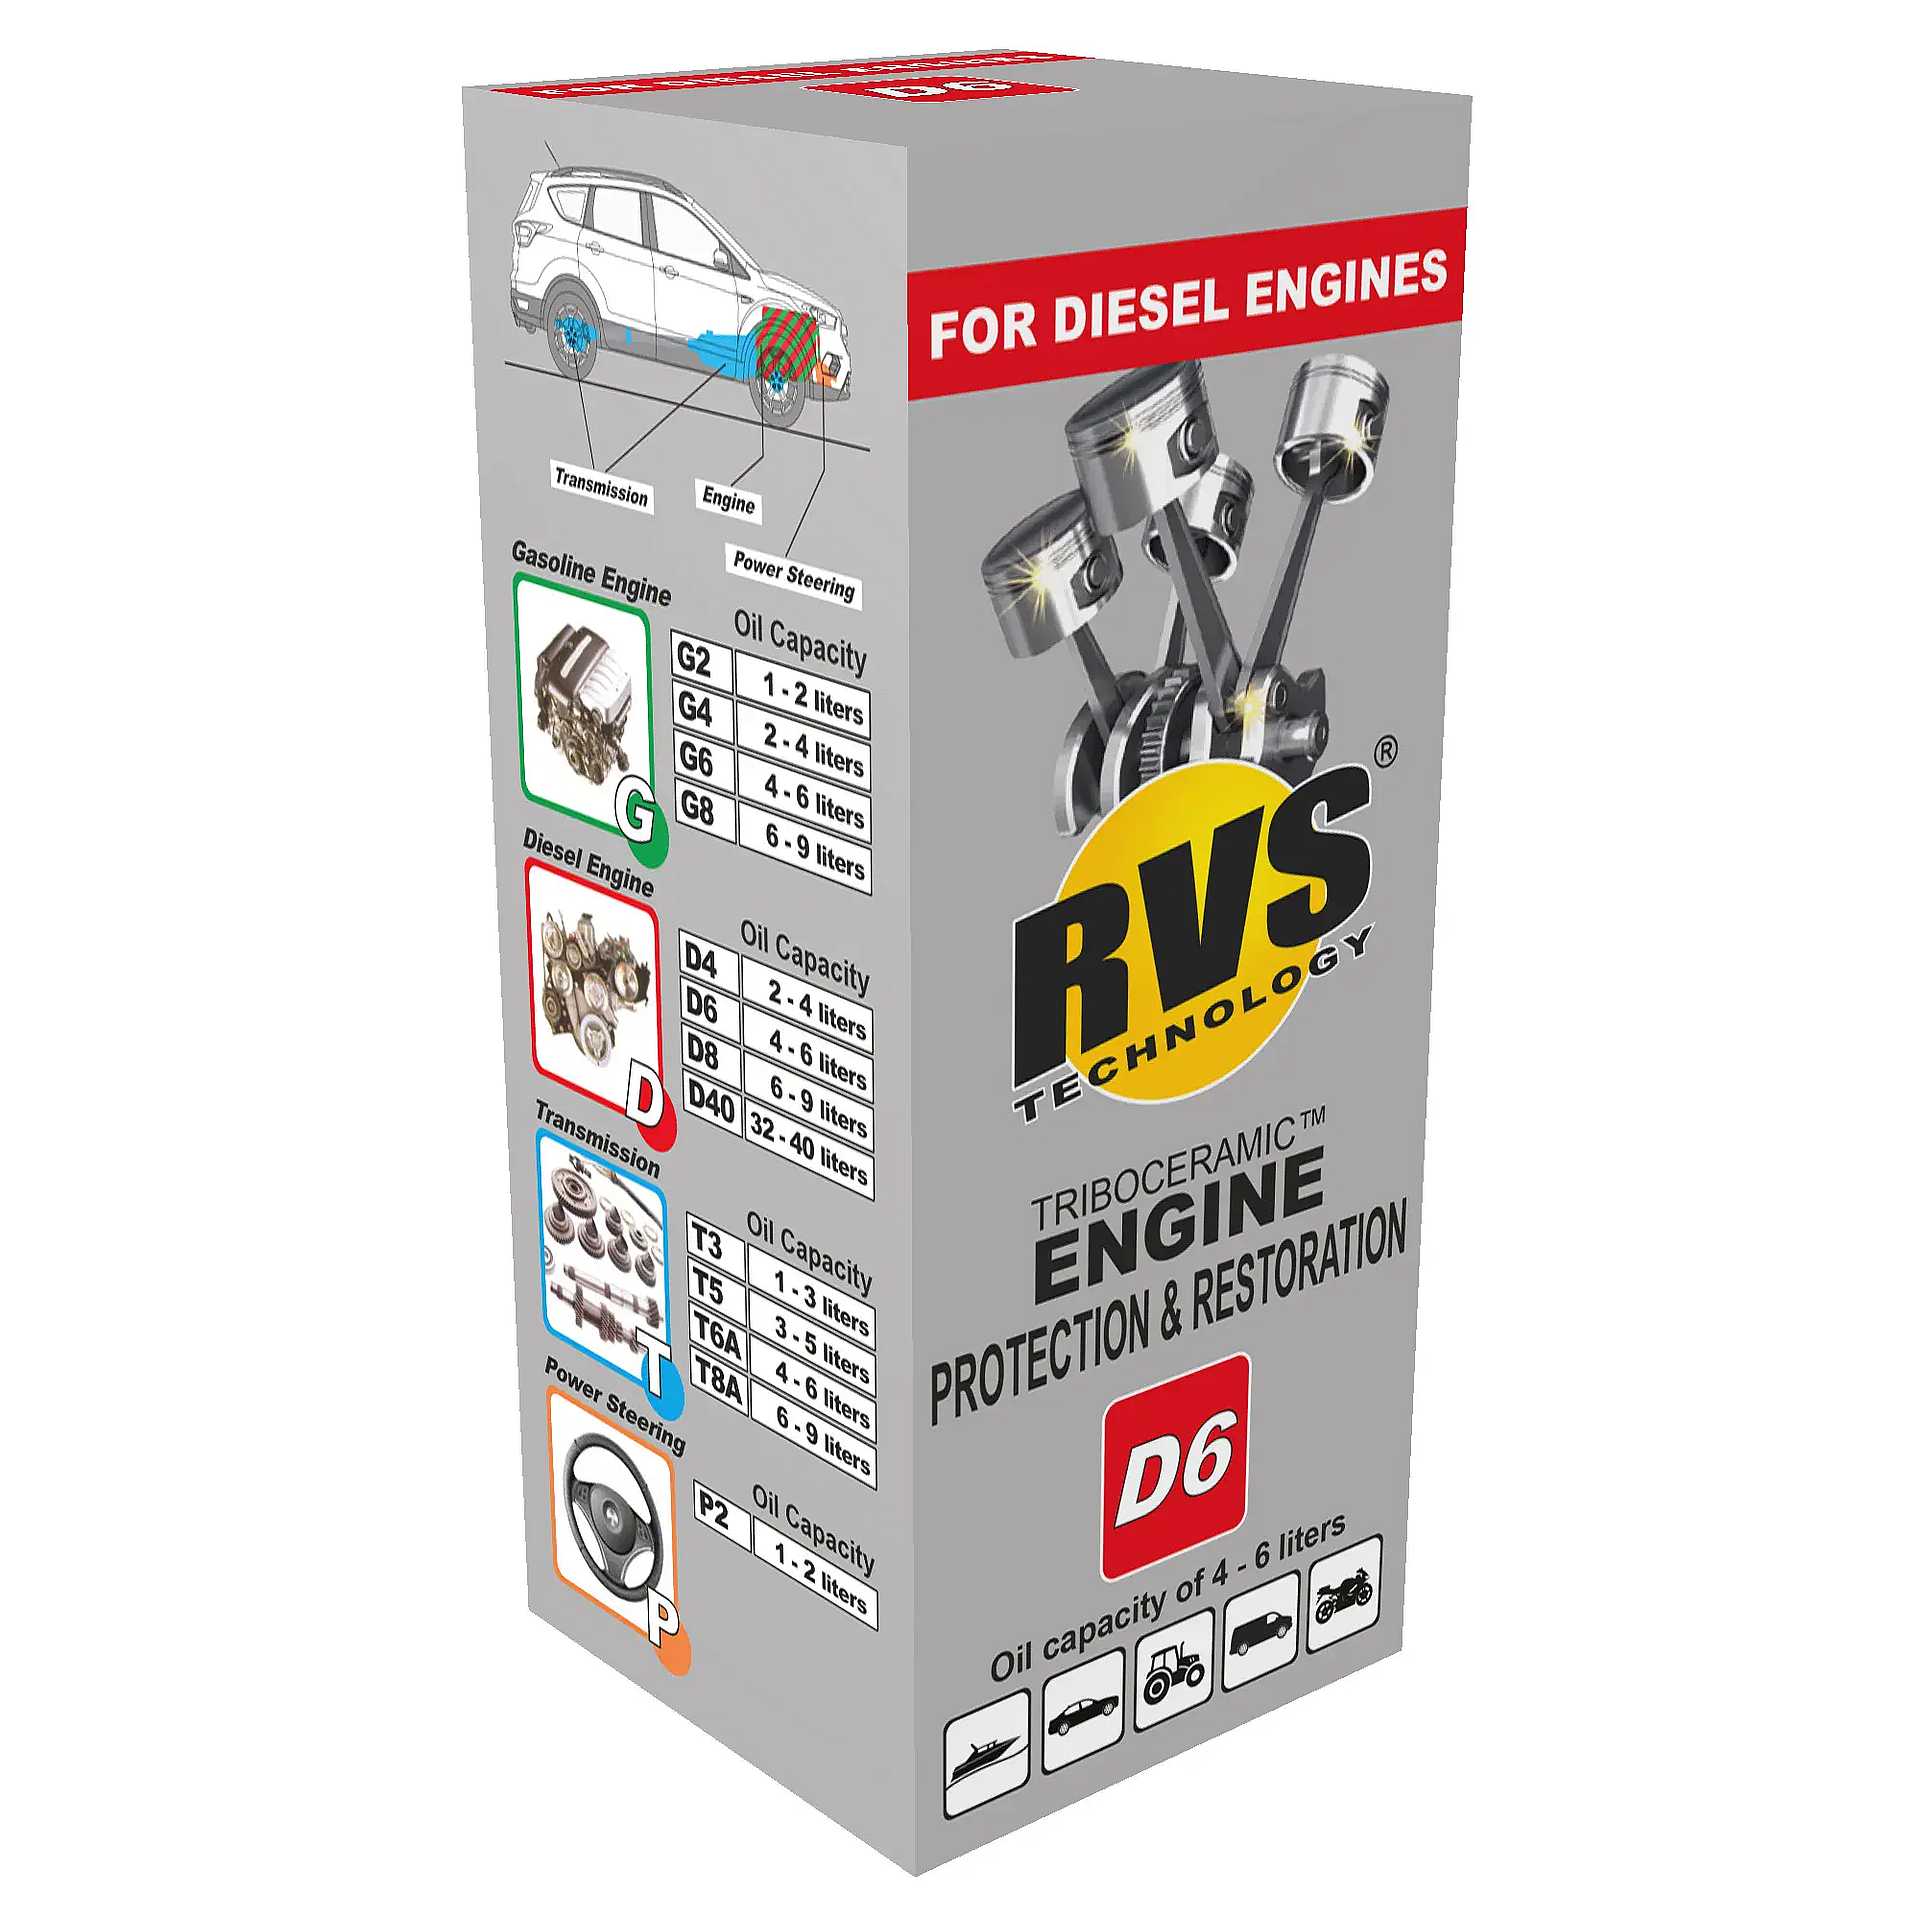 RVS Engine Protection & Restoration D6